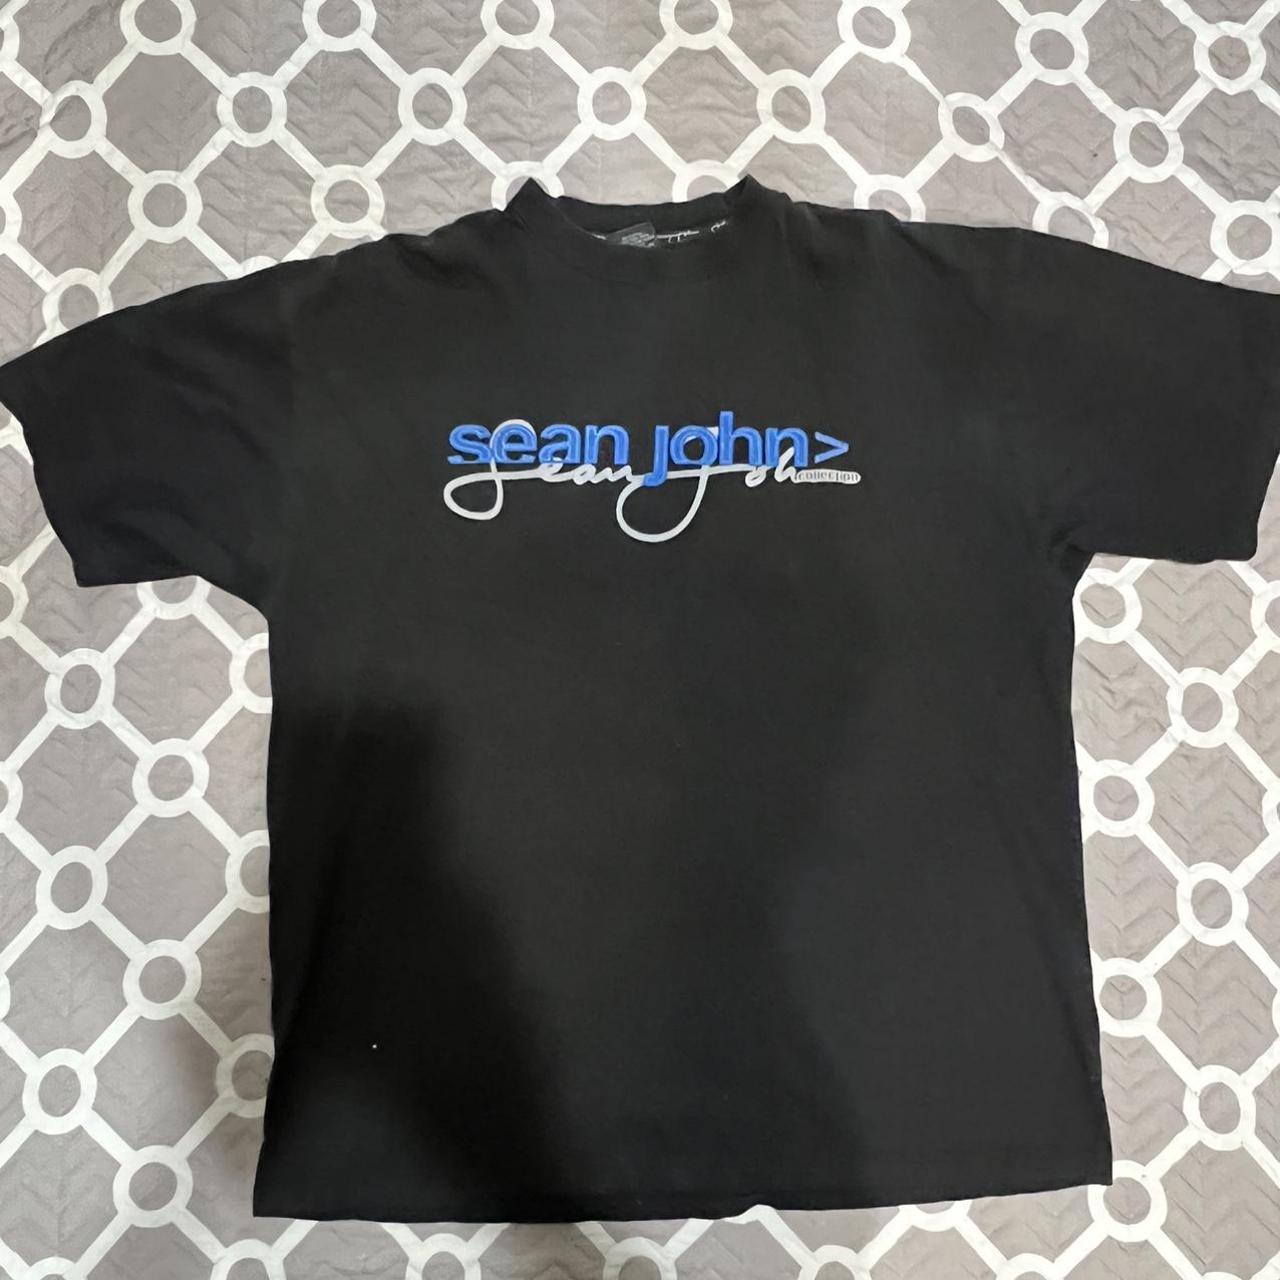 Sean John Men's Black and Blue T-shirt (2)